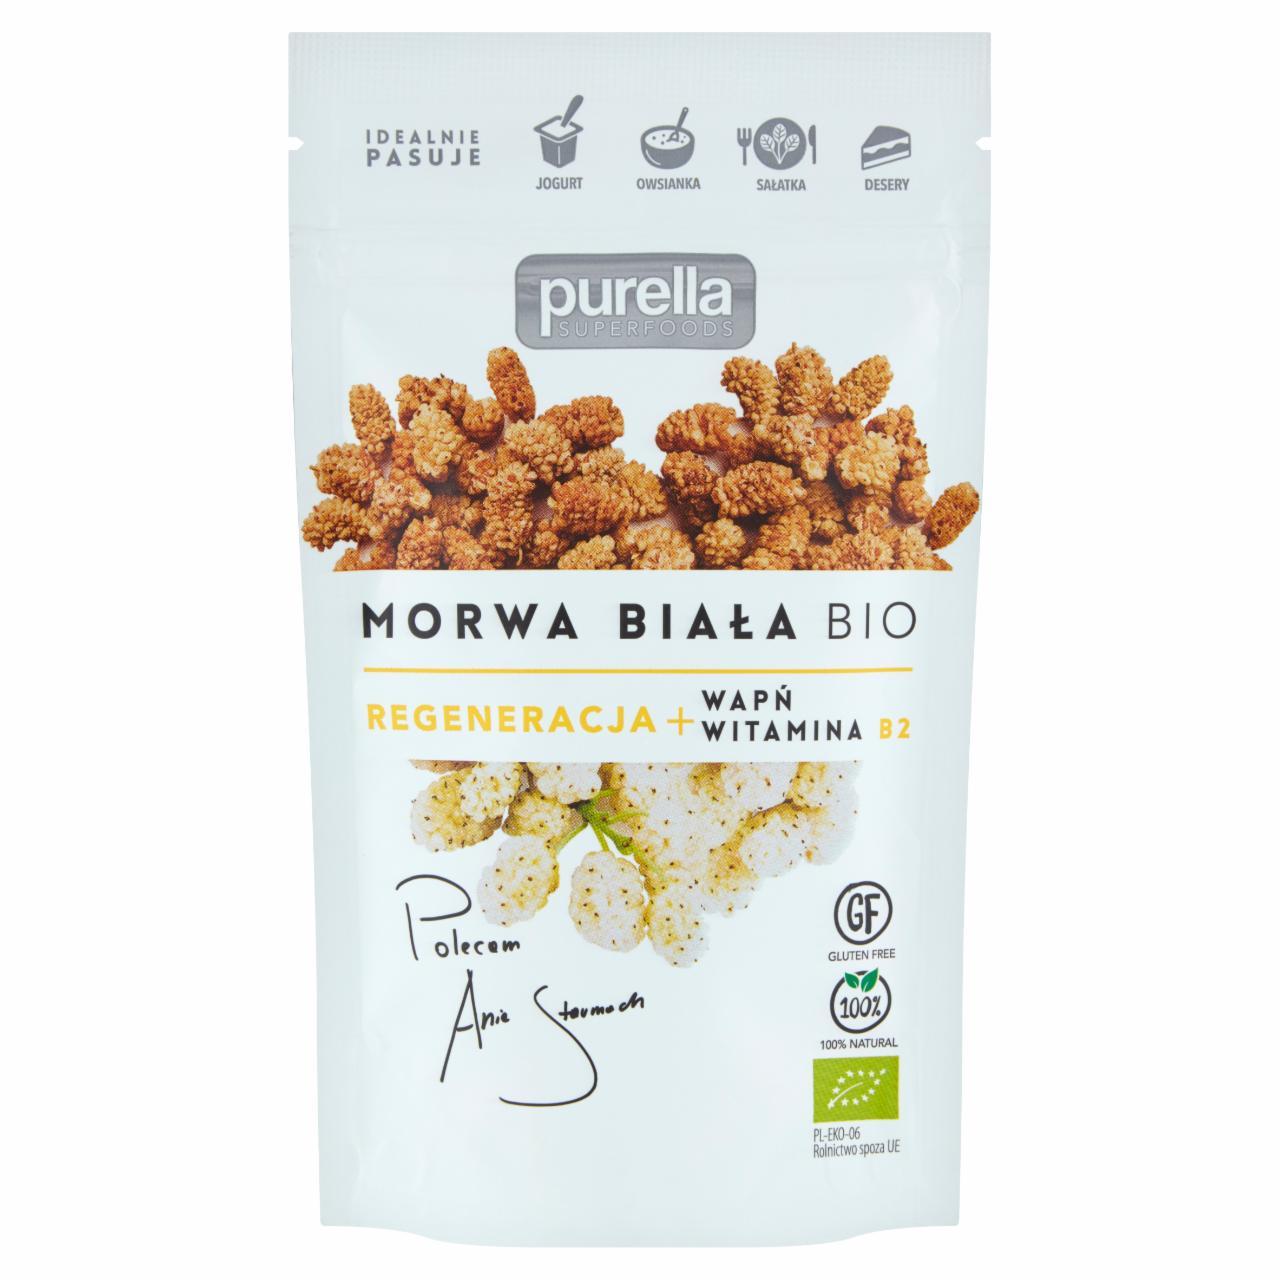 Zdjęcia - Morwa biała Bio Purella Superfoods